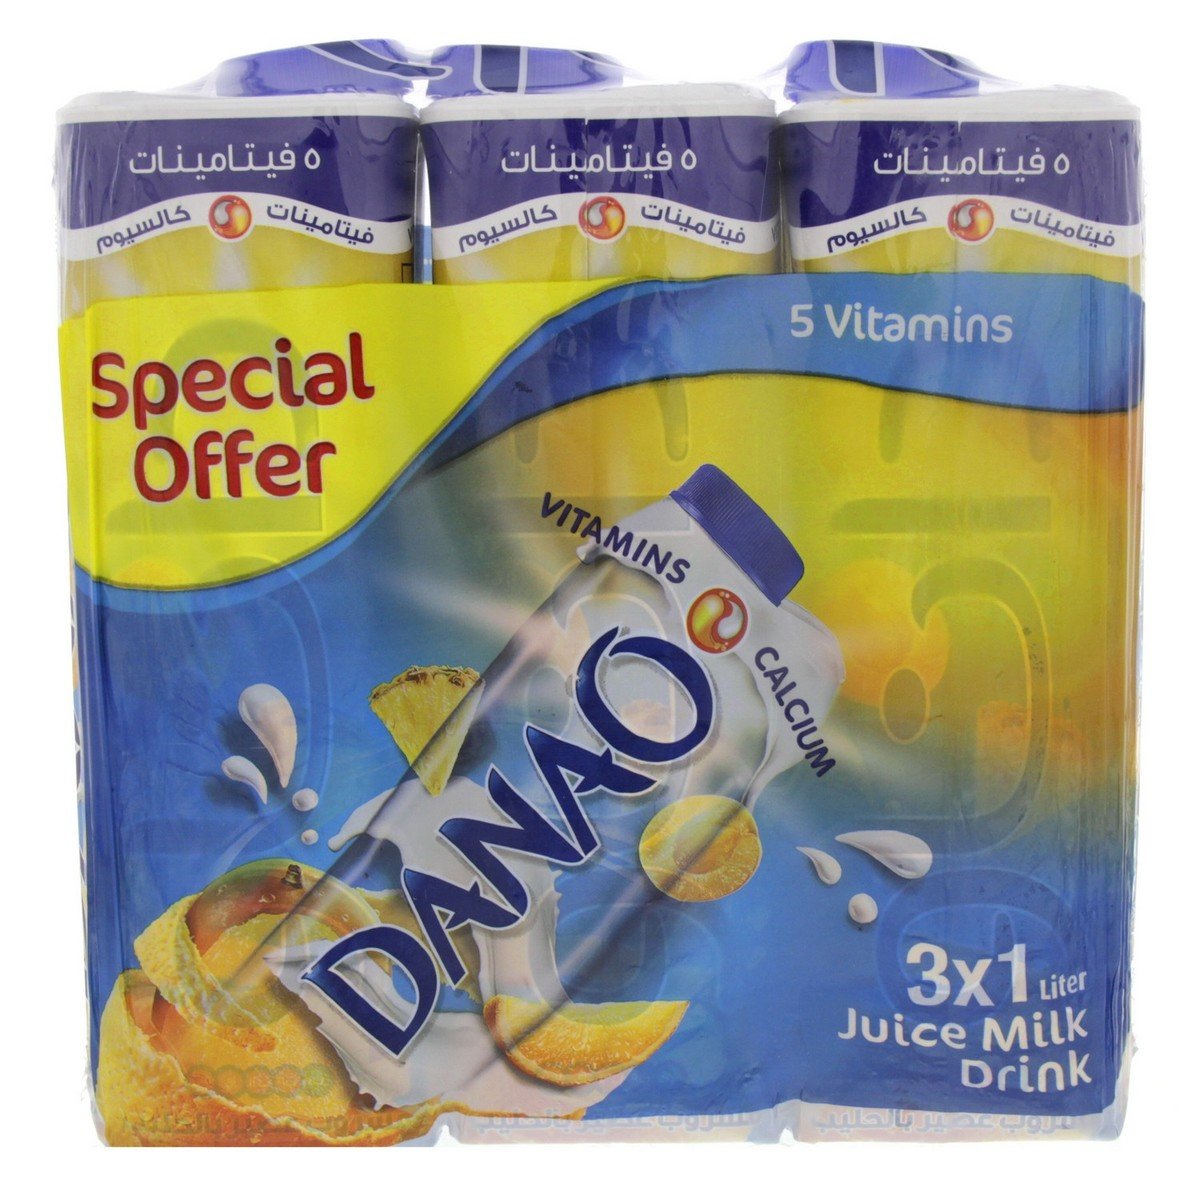 Danao 5 Vitamins Juice Milk Drink 3 x 1 Litre